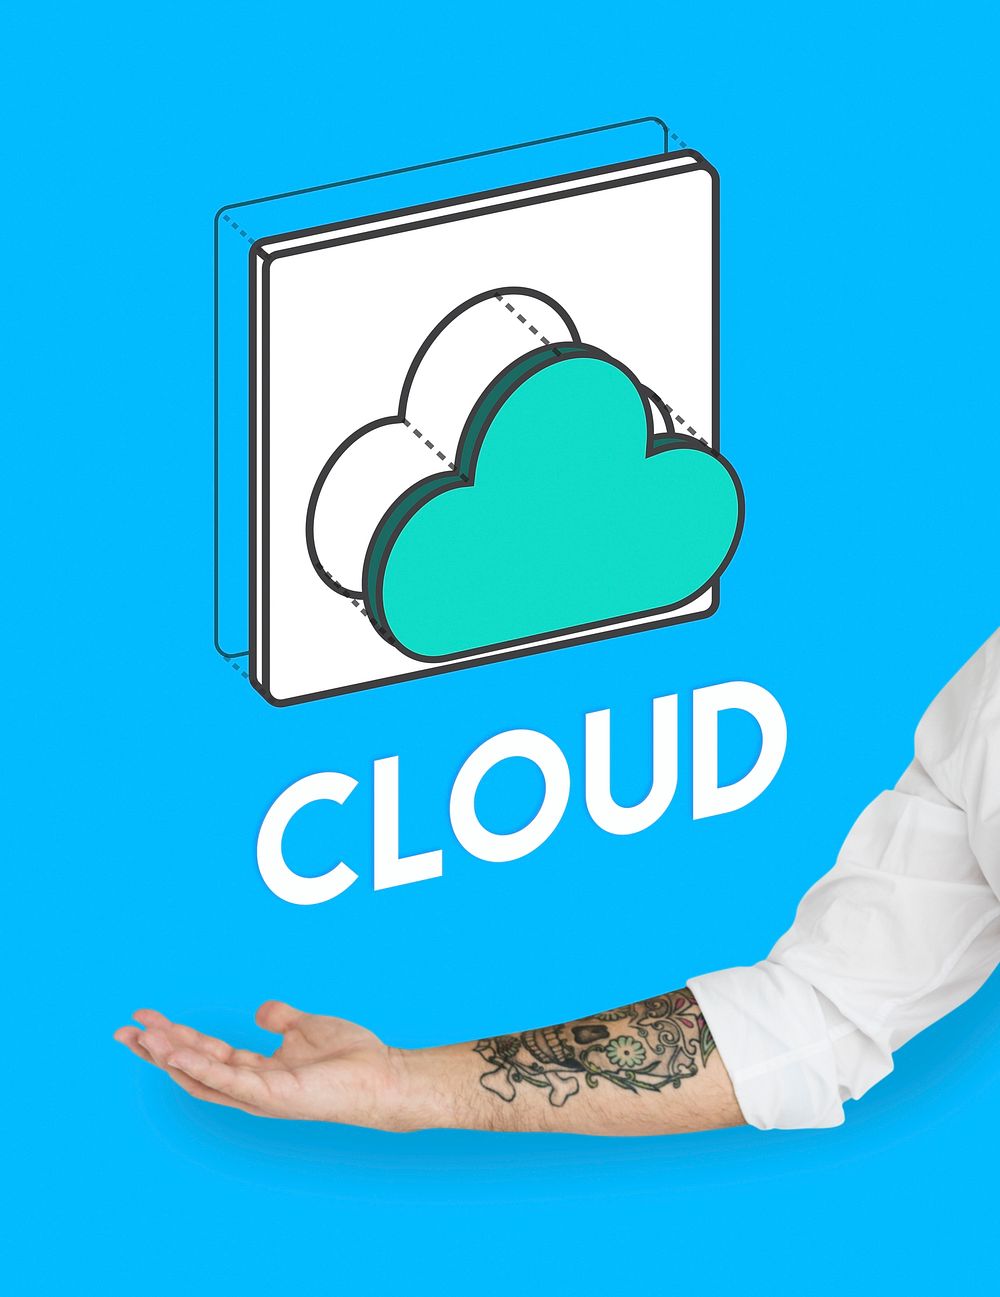 Data computing cloud icon graphic